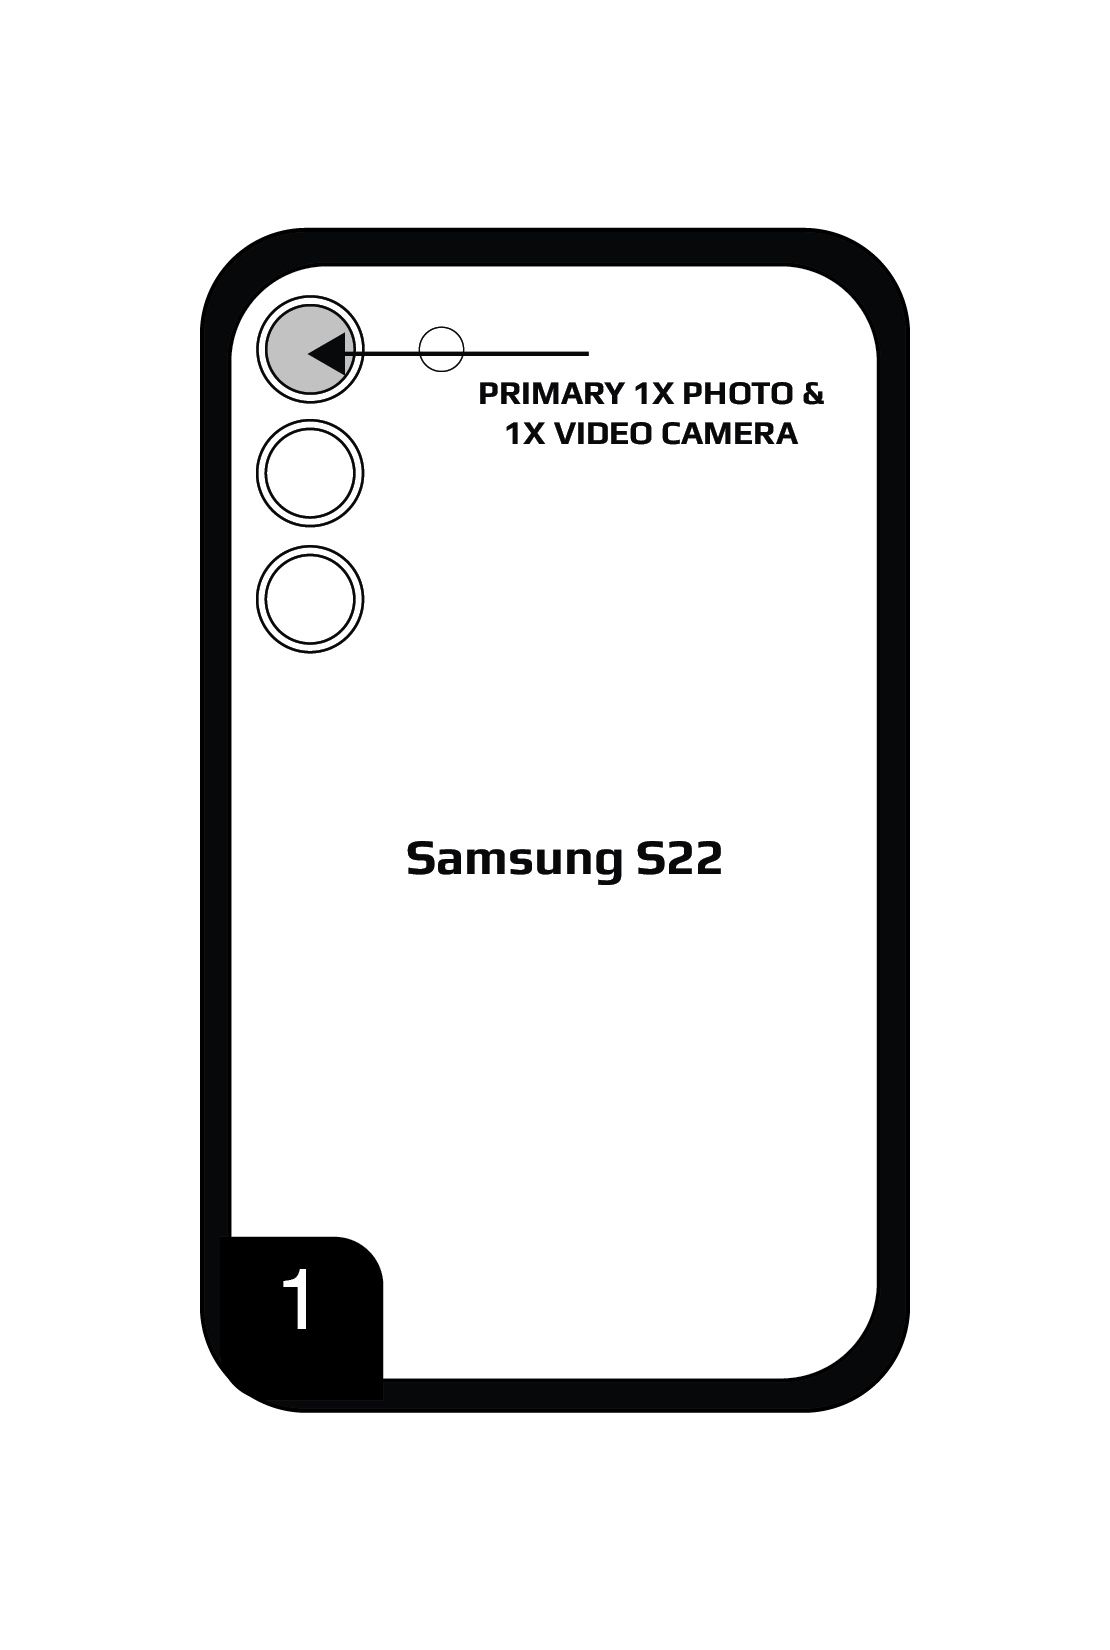 Samsung S22 camera step 1